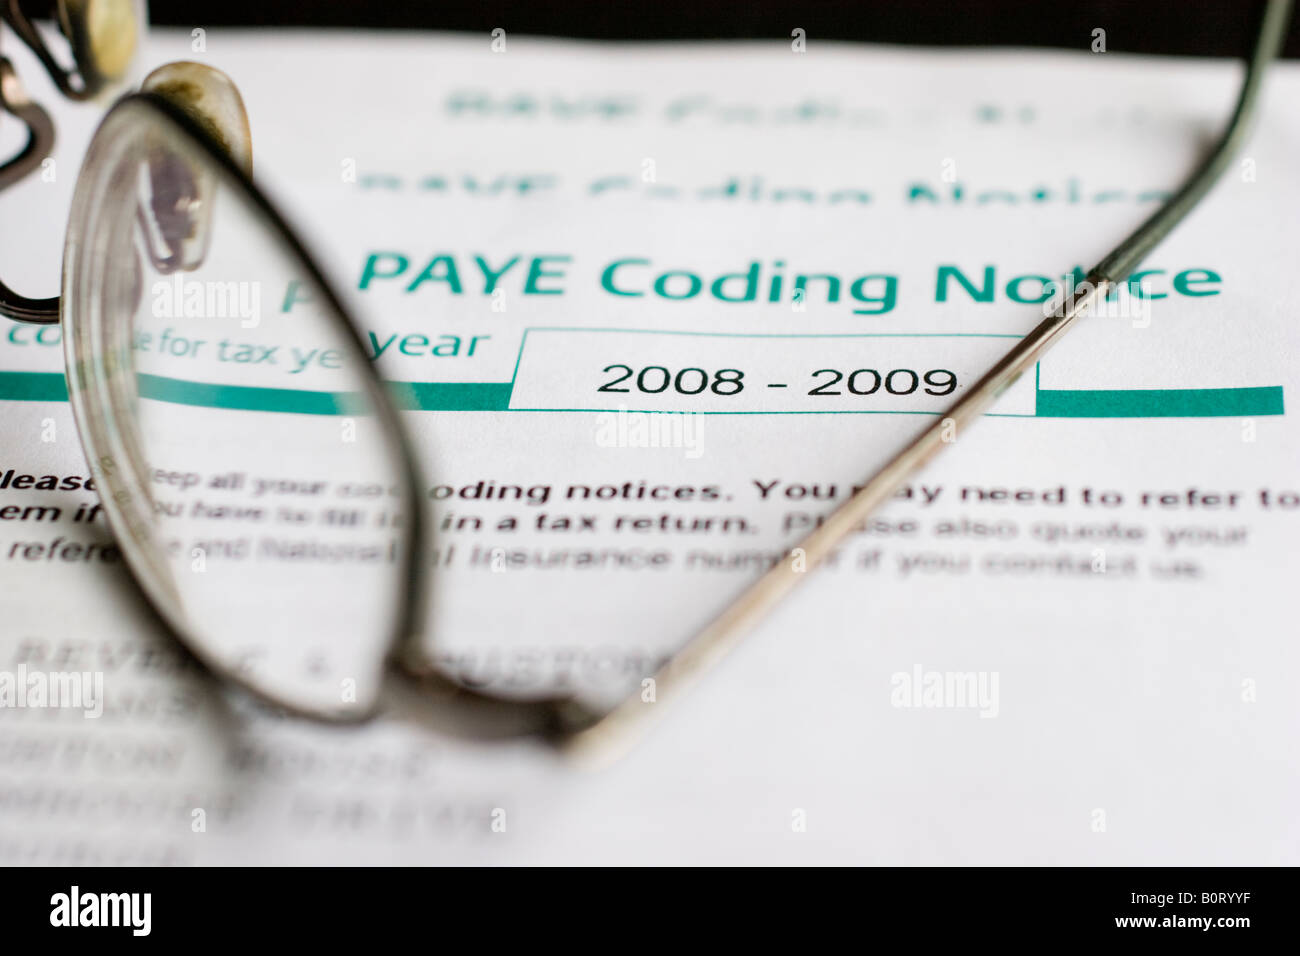 paye notice coding 2008 2009 pay as you earn tax coding UK united kingdom tax advise Stock Photo